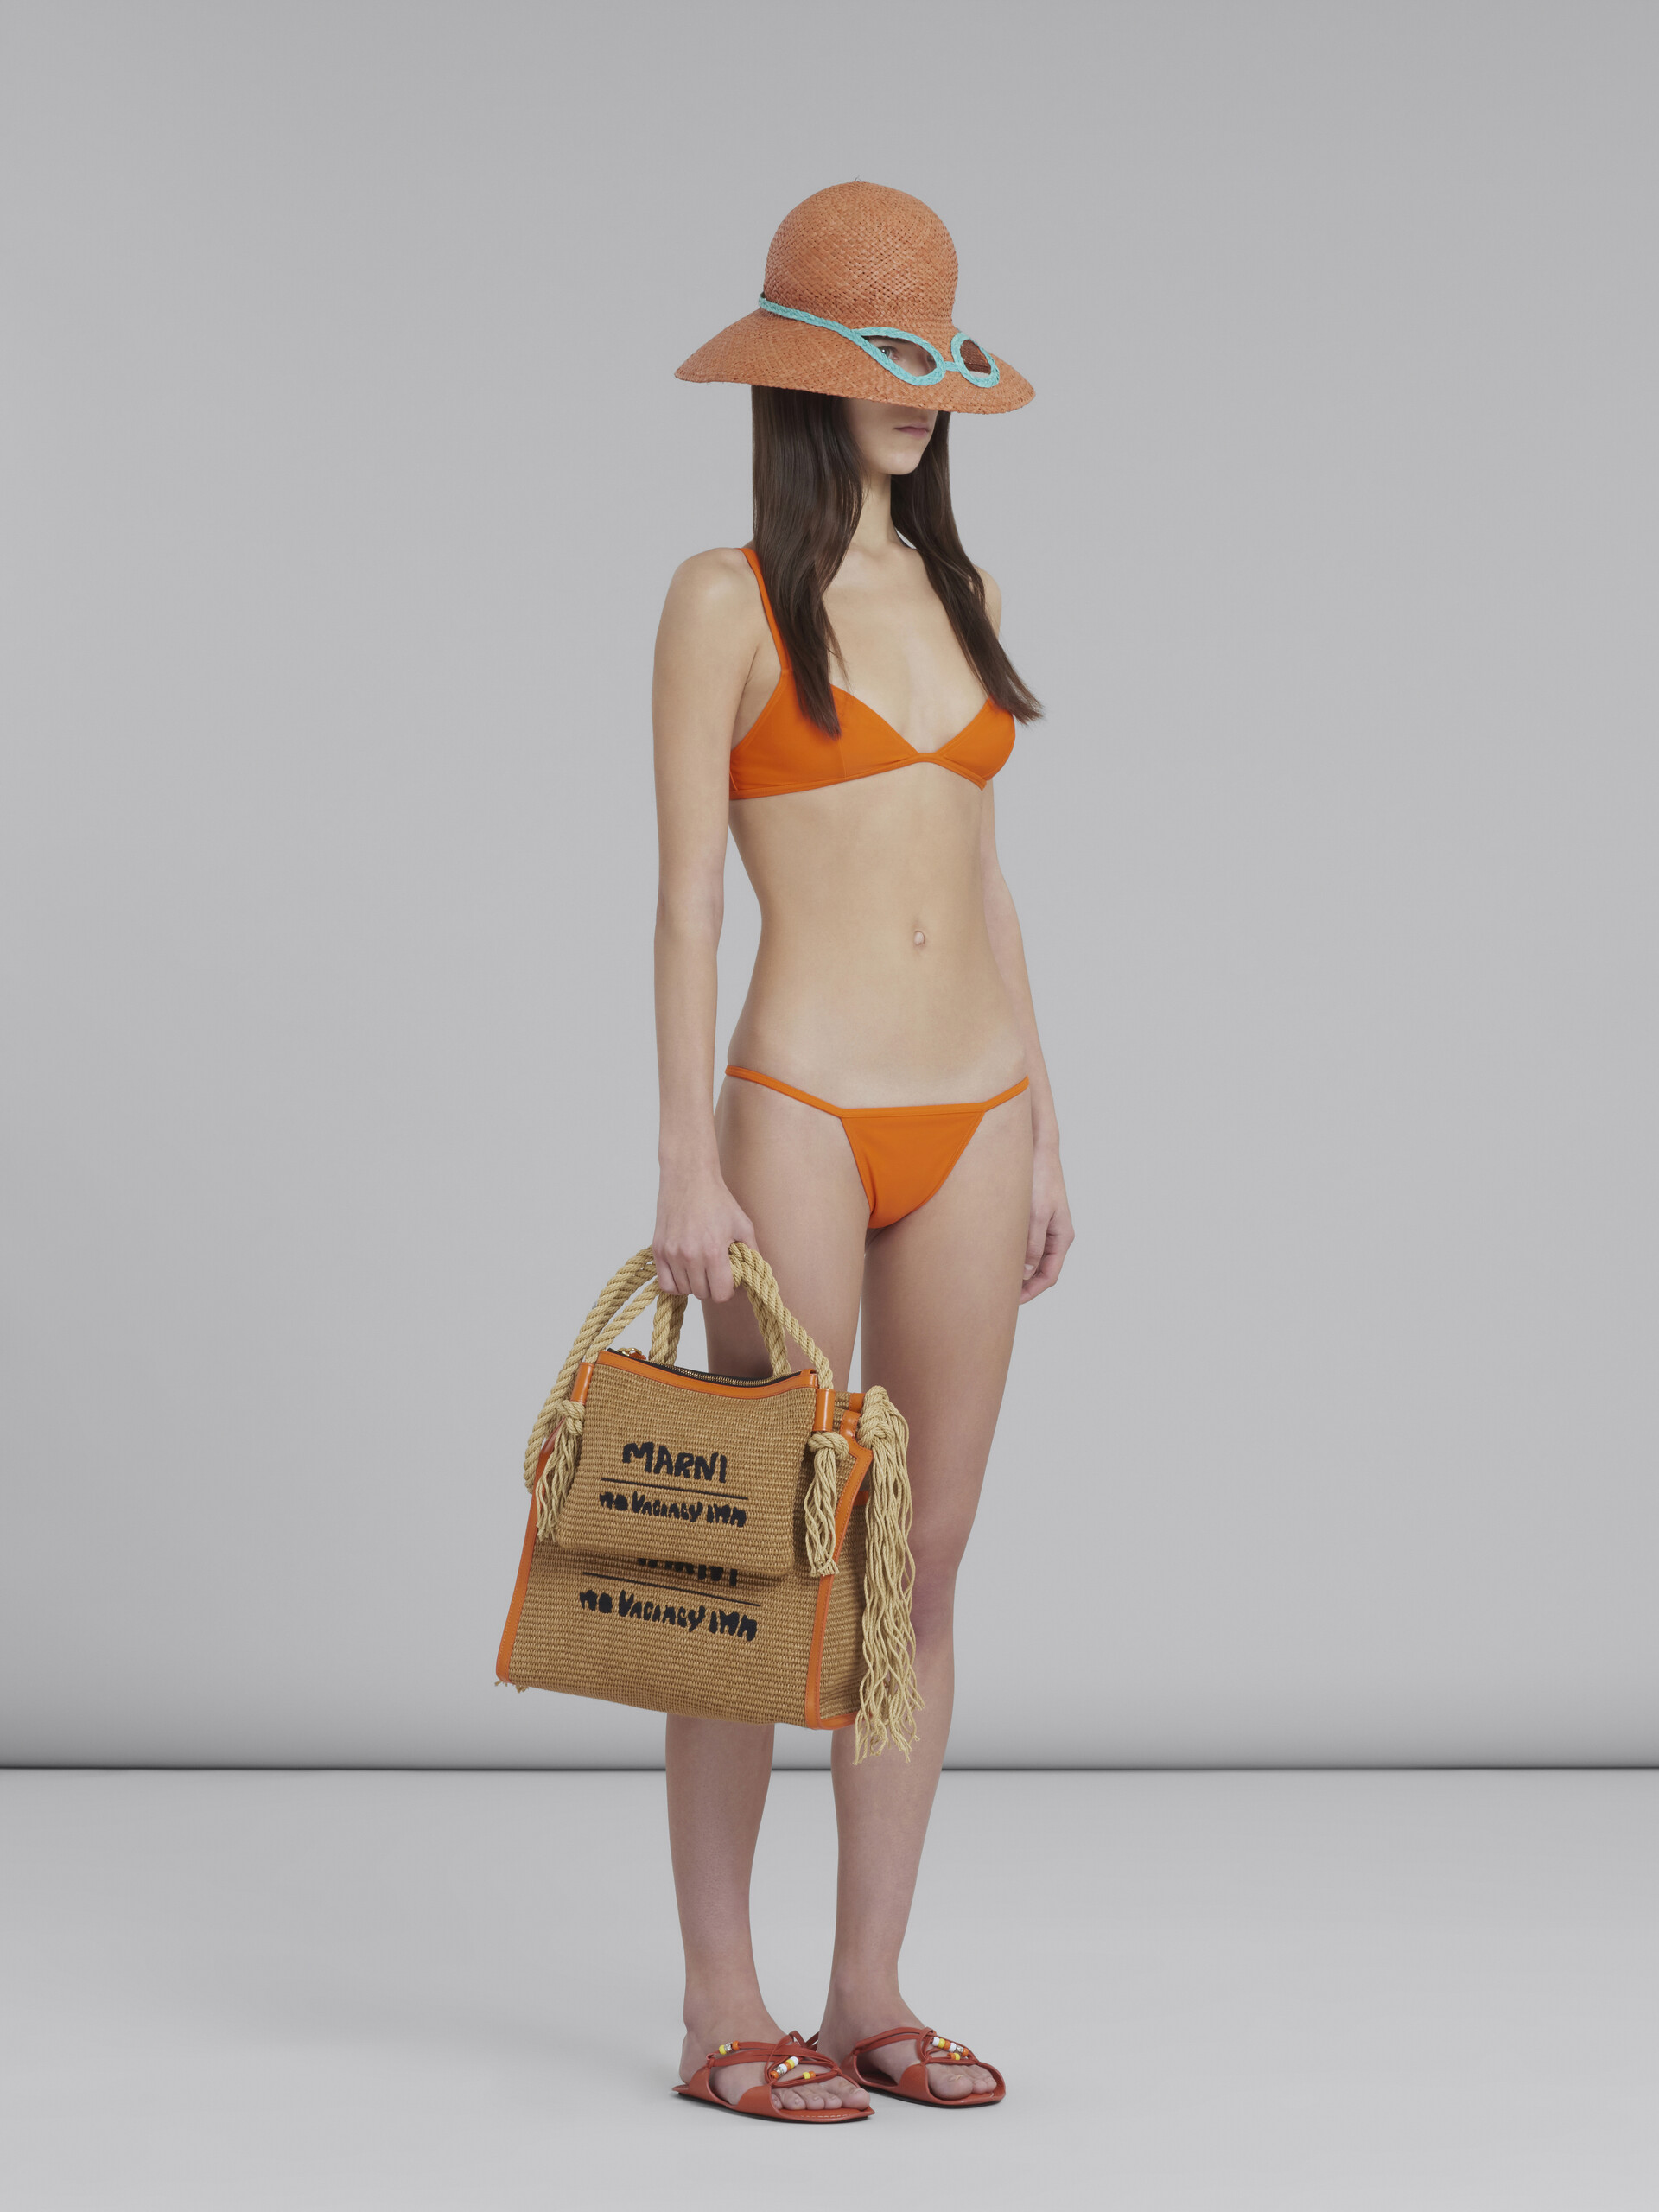 Marni x No Vacancy Inn - Orange stretch jersey bikini - Swimwear - Image 5